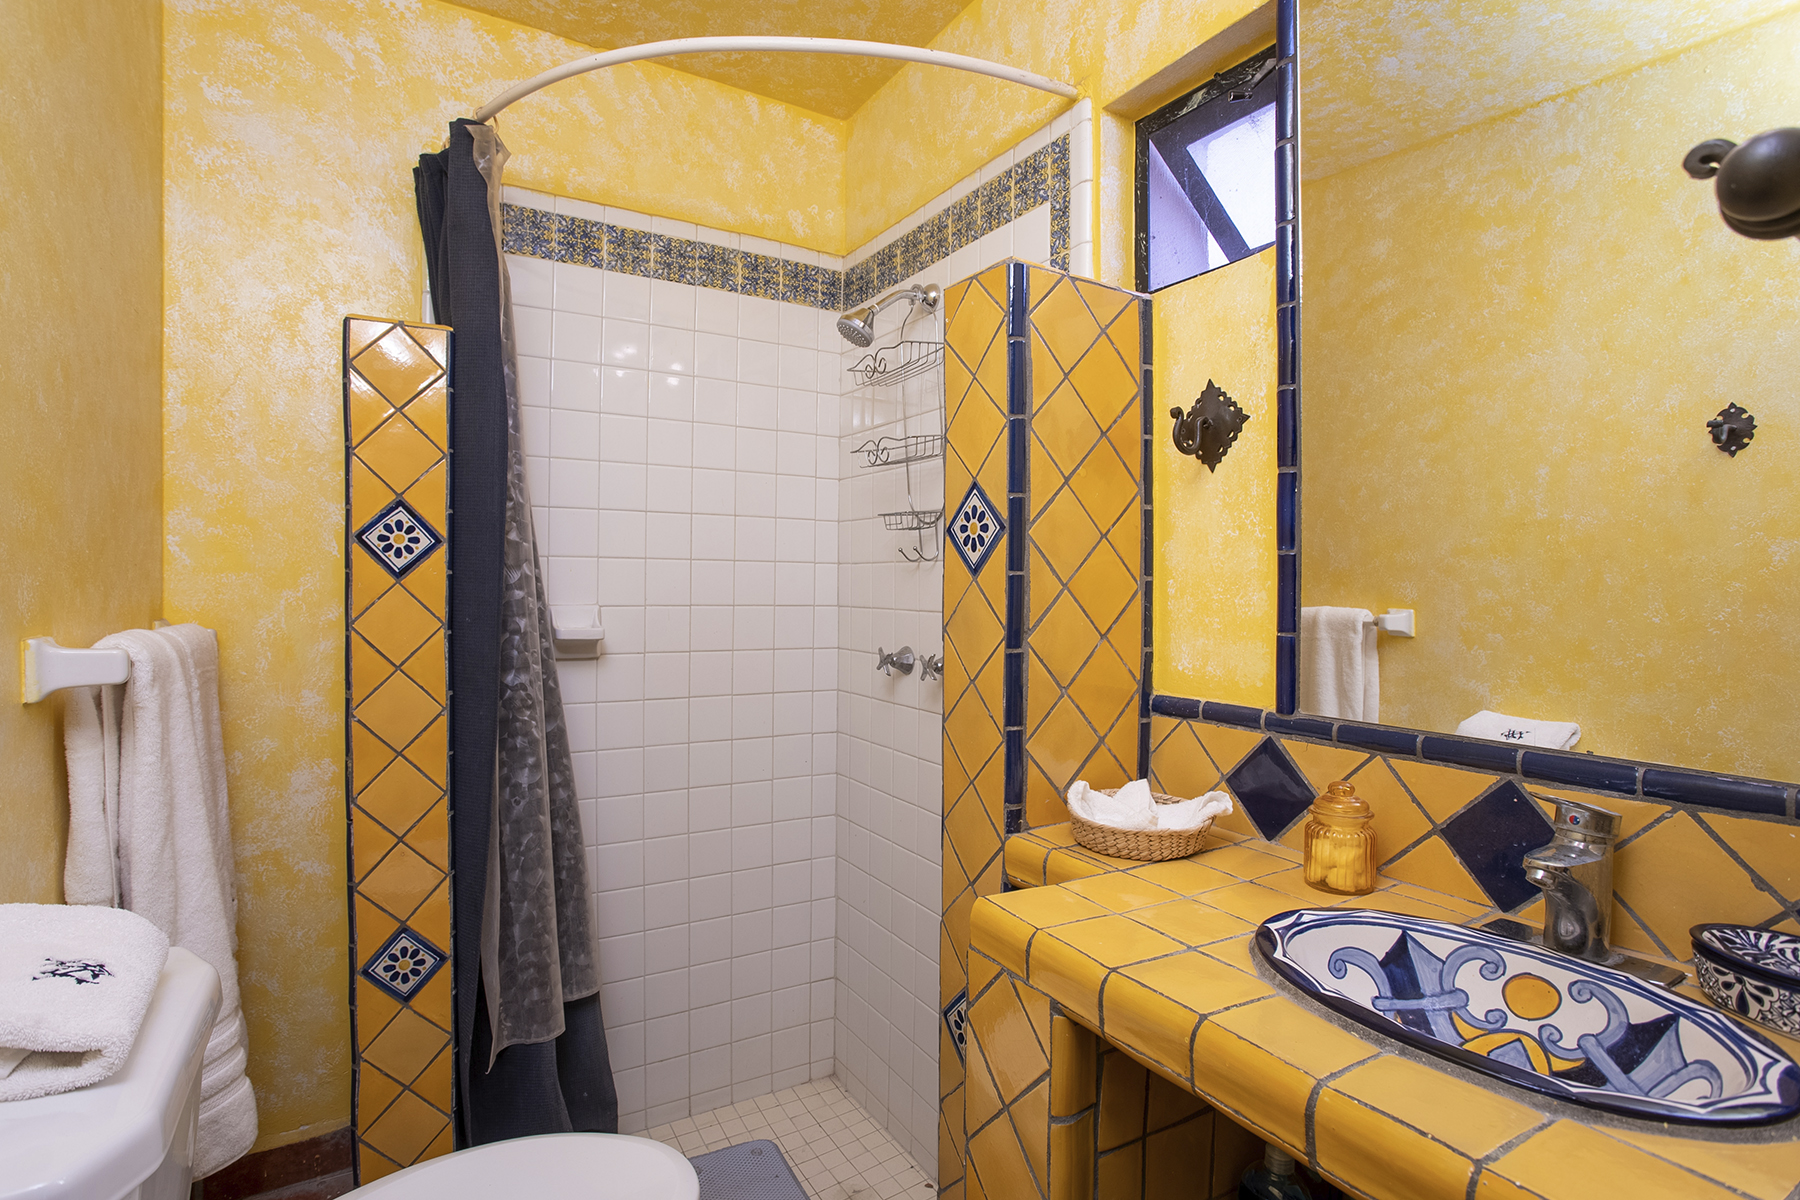 16 Colorful Joyous Artesan Tiles in Baths